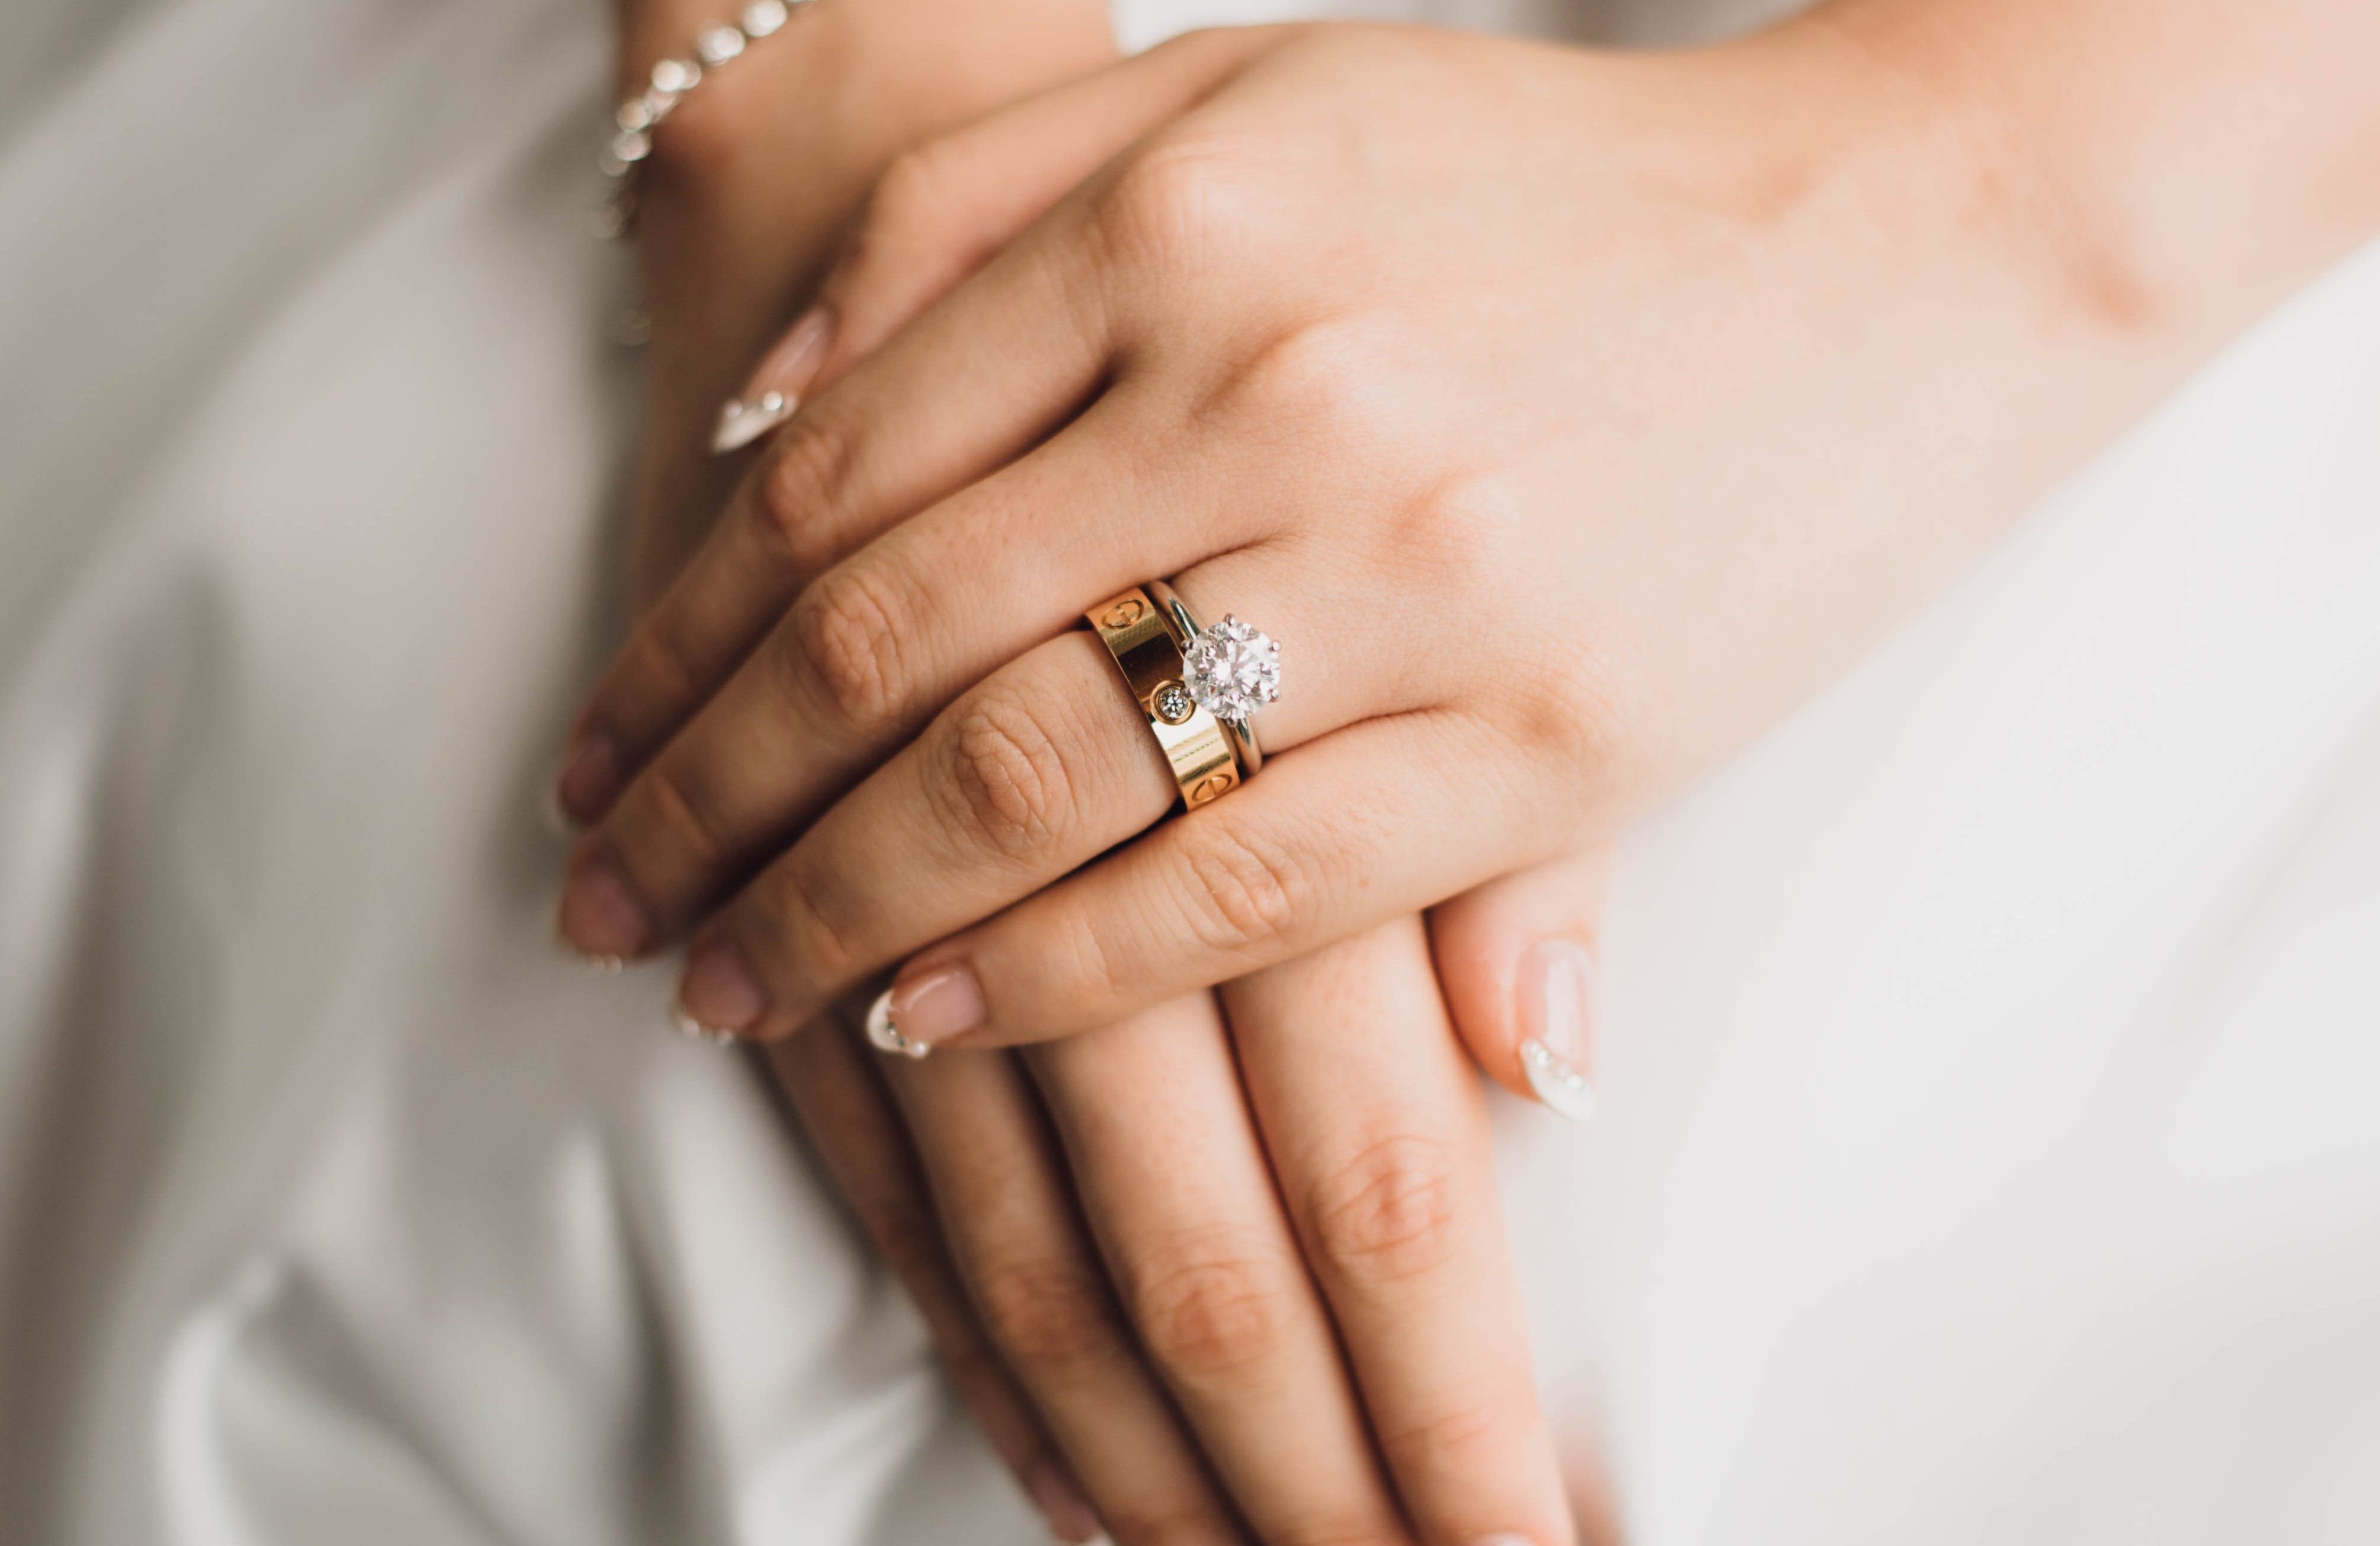 На какой руке носят армяне обручальное кольцо. Обручальное и помолвочное кольцо. Обручальное кольцо. Обручальное и помолвочное кольцо вместе. Обручальное кольцо на пальце.